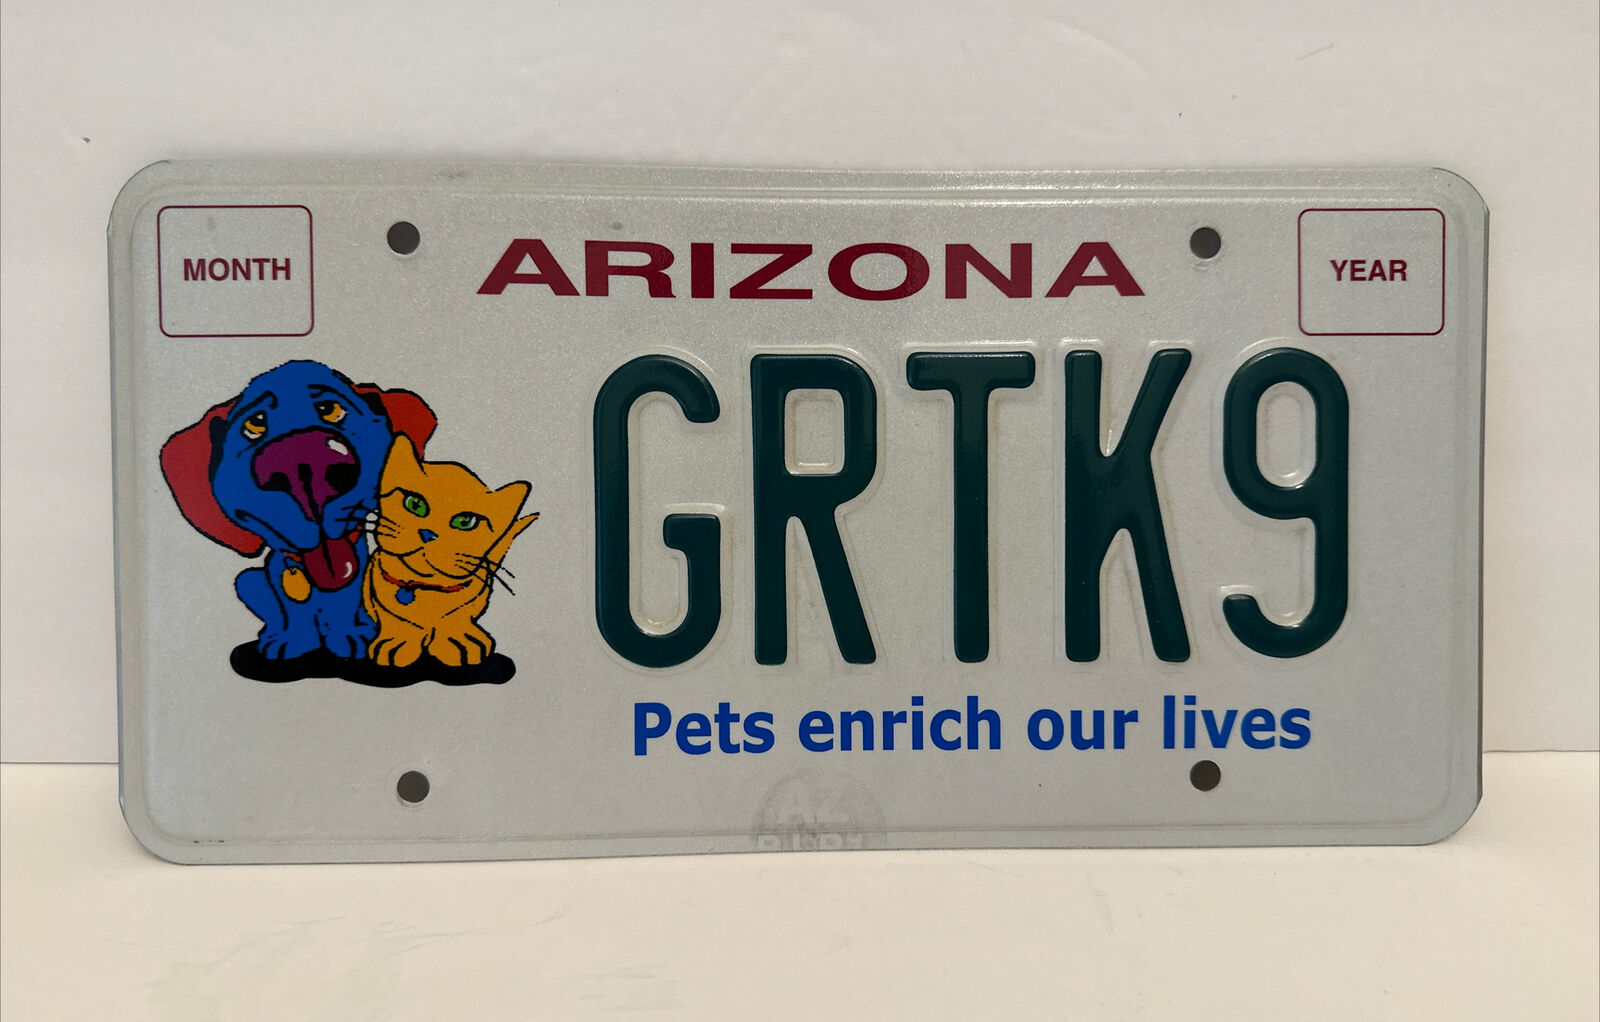 ARIZONA Vanity License Plate - GRTK9 - Pets enrich our lives, Great K9